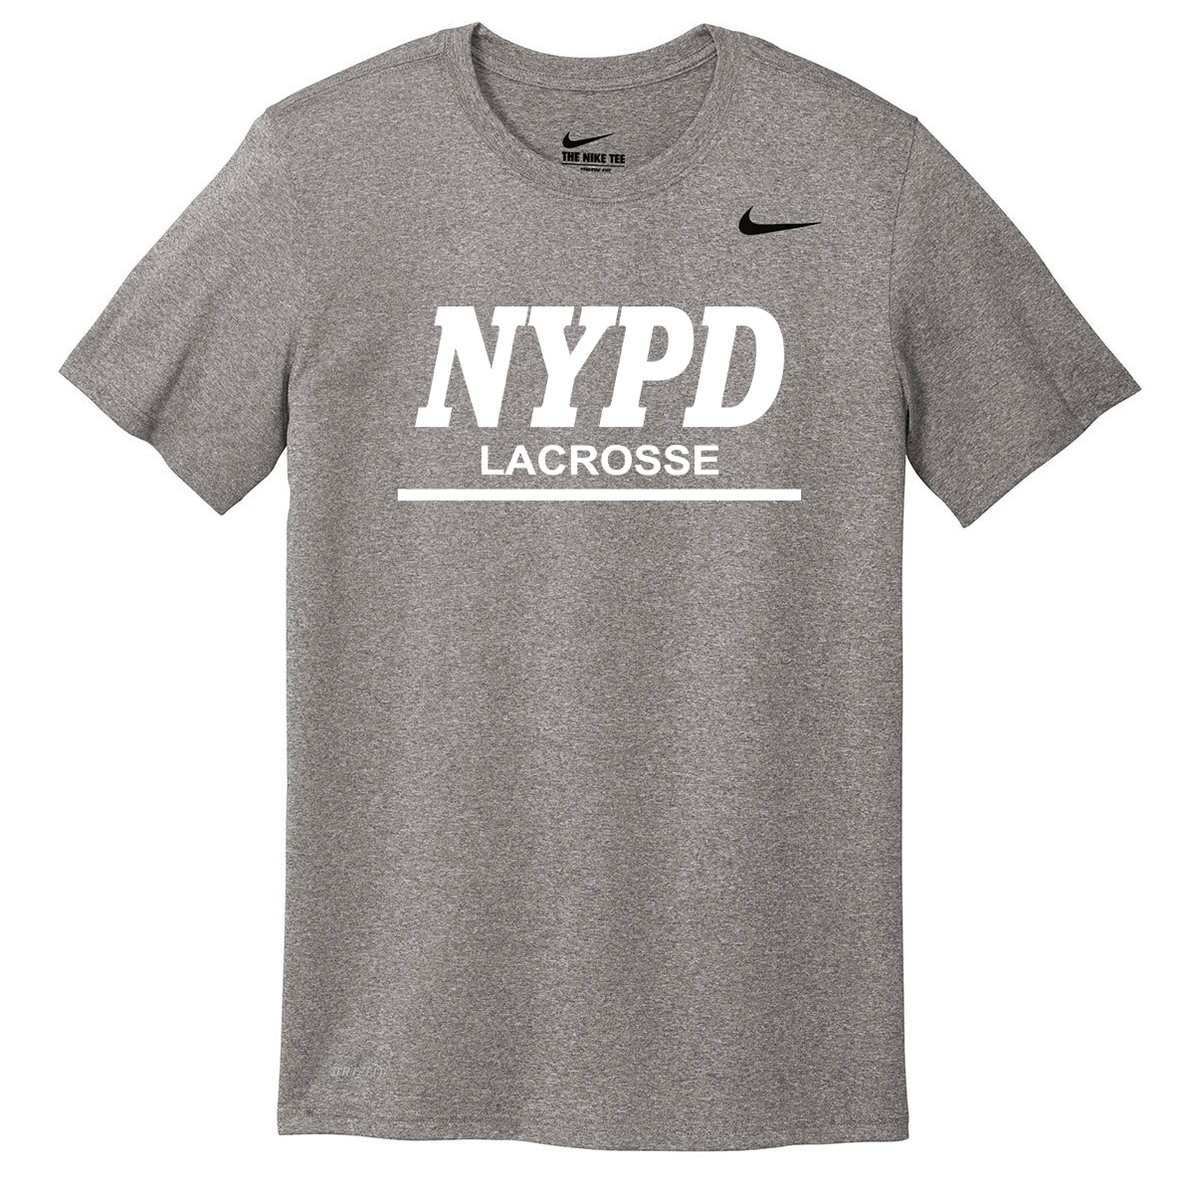 NYPD Lacrosse Nike Legend Tee